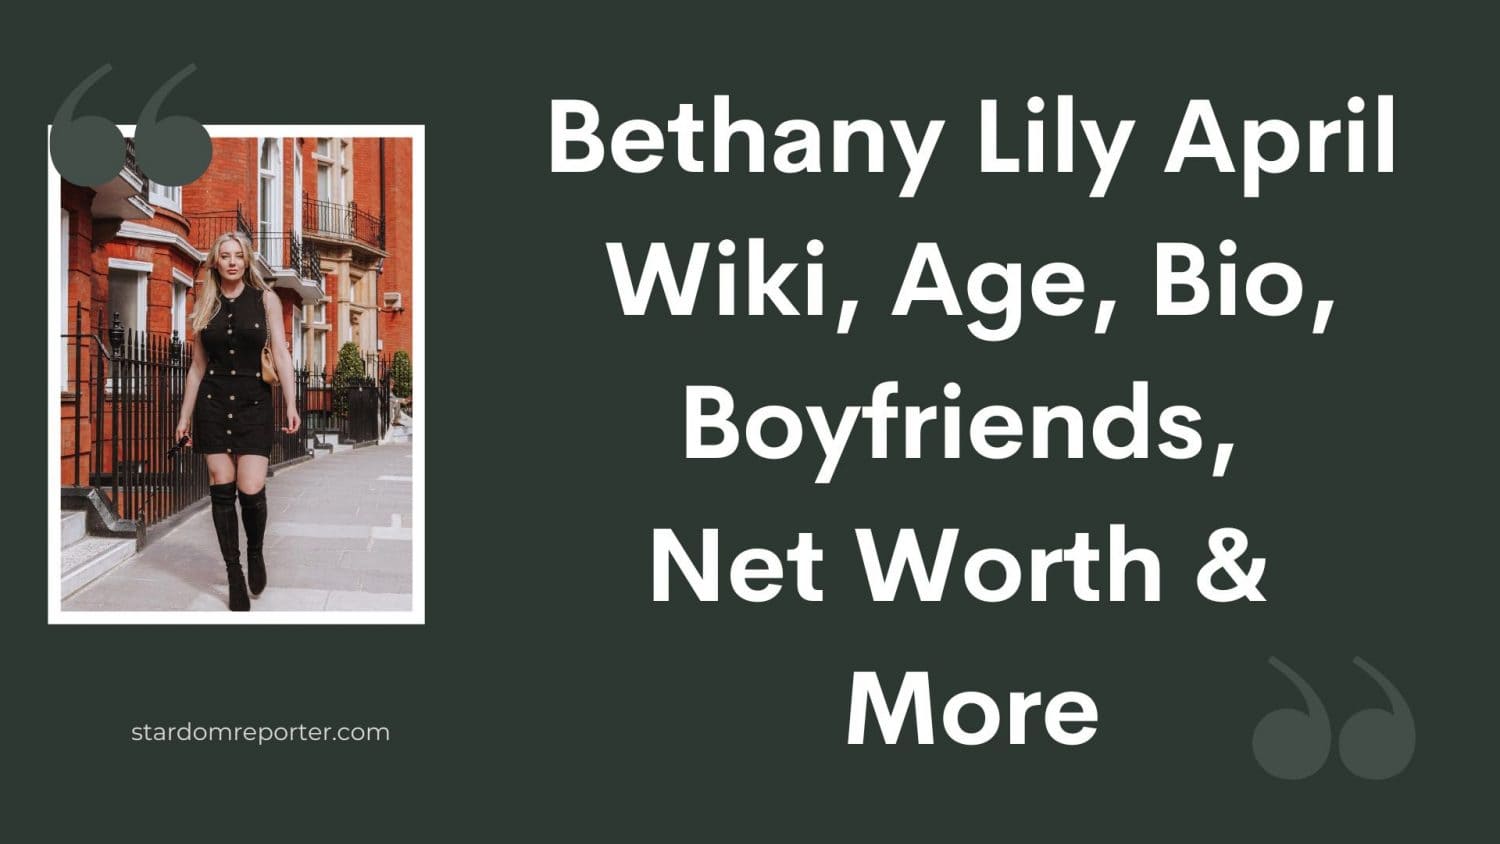 Bethany Lily April Wiki, Age, Bio, Boyfriends, Net Worth & More - 33